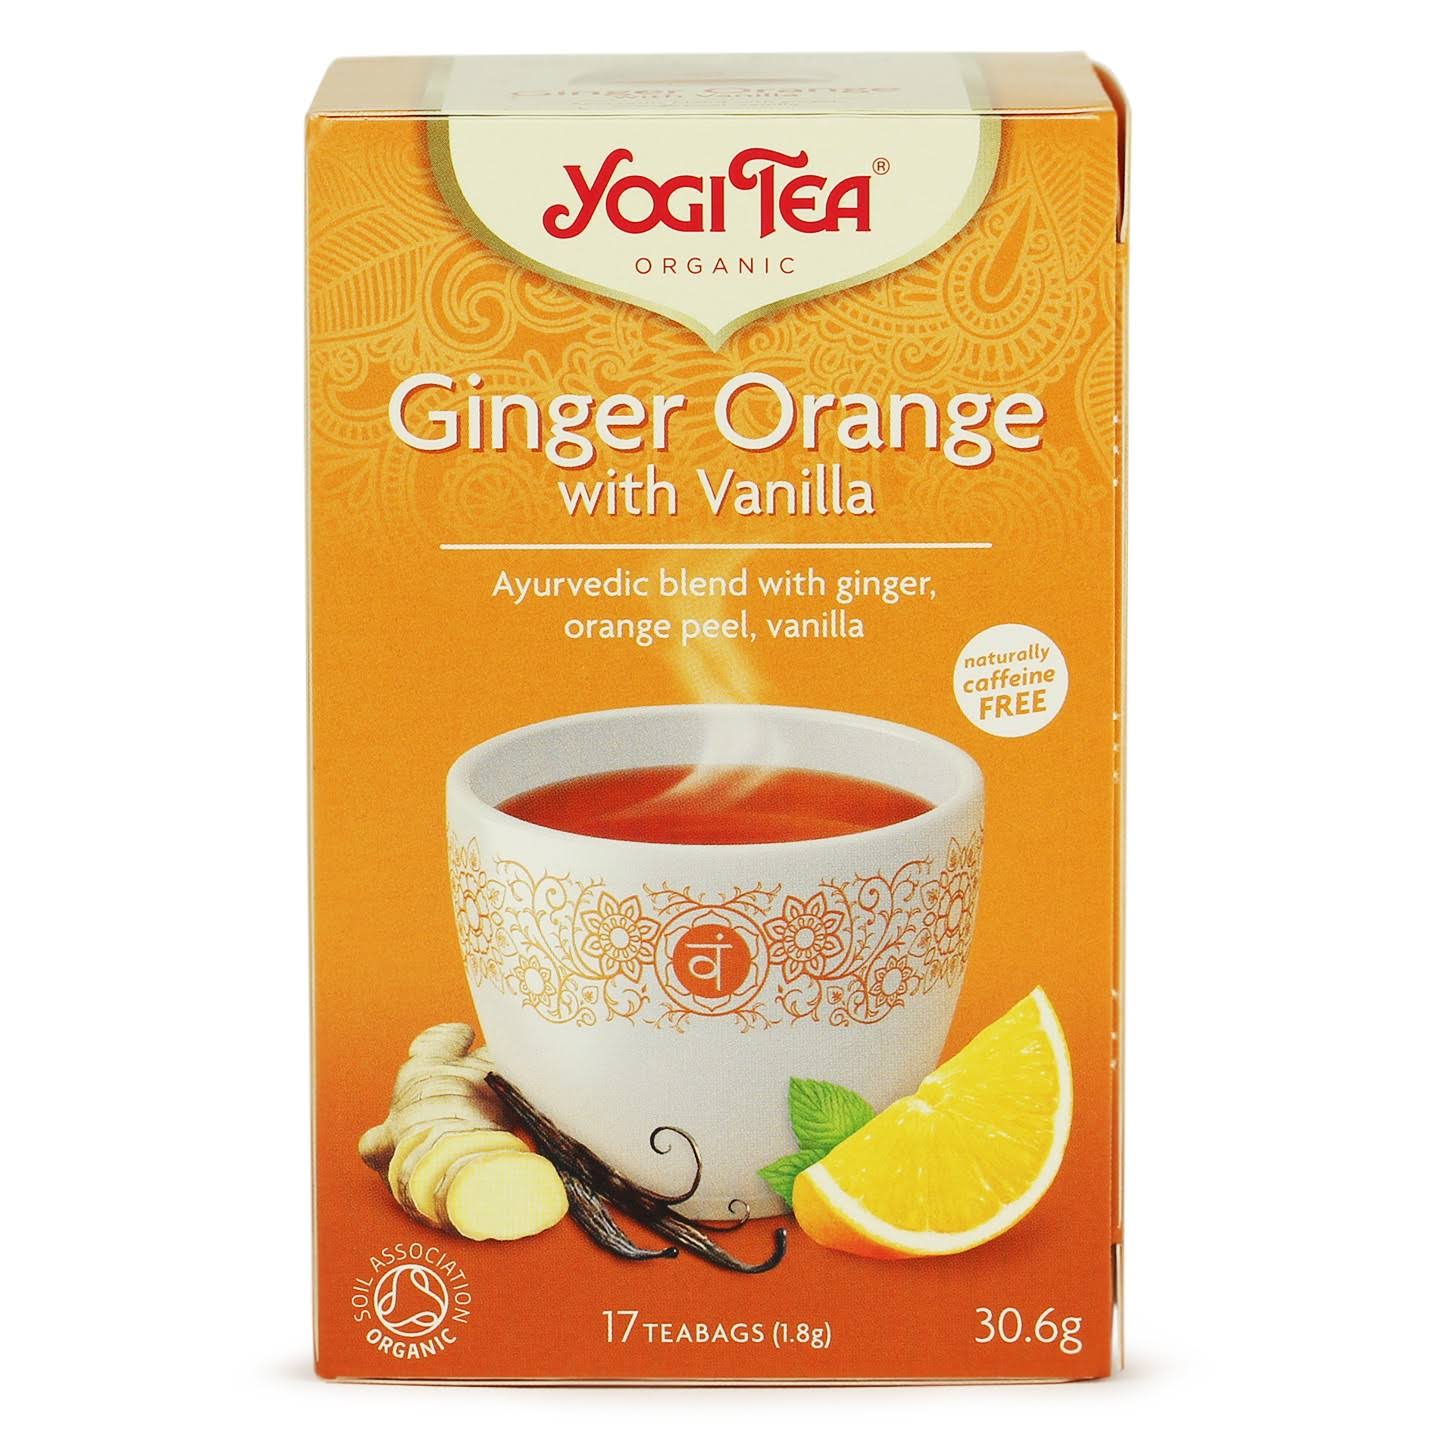 Yogi Tea - Ginger Orange with Vanilla, 17 Teabags, 30.6g